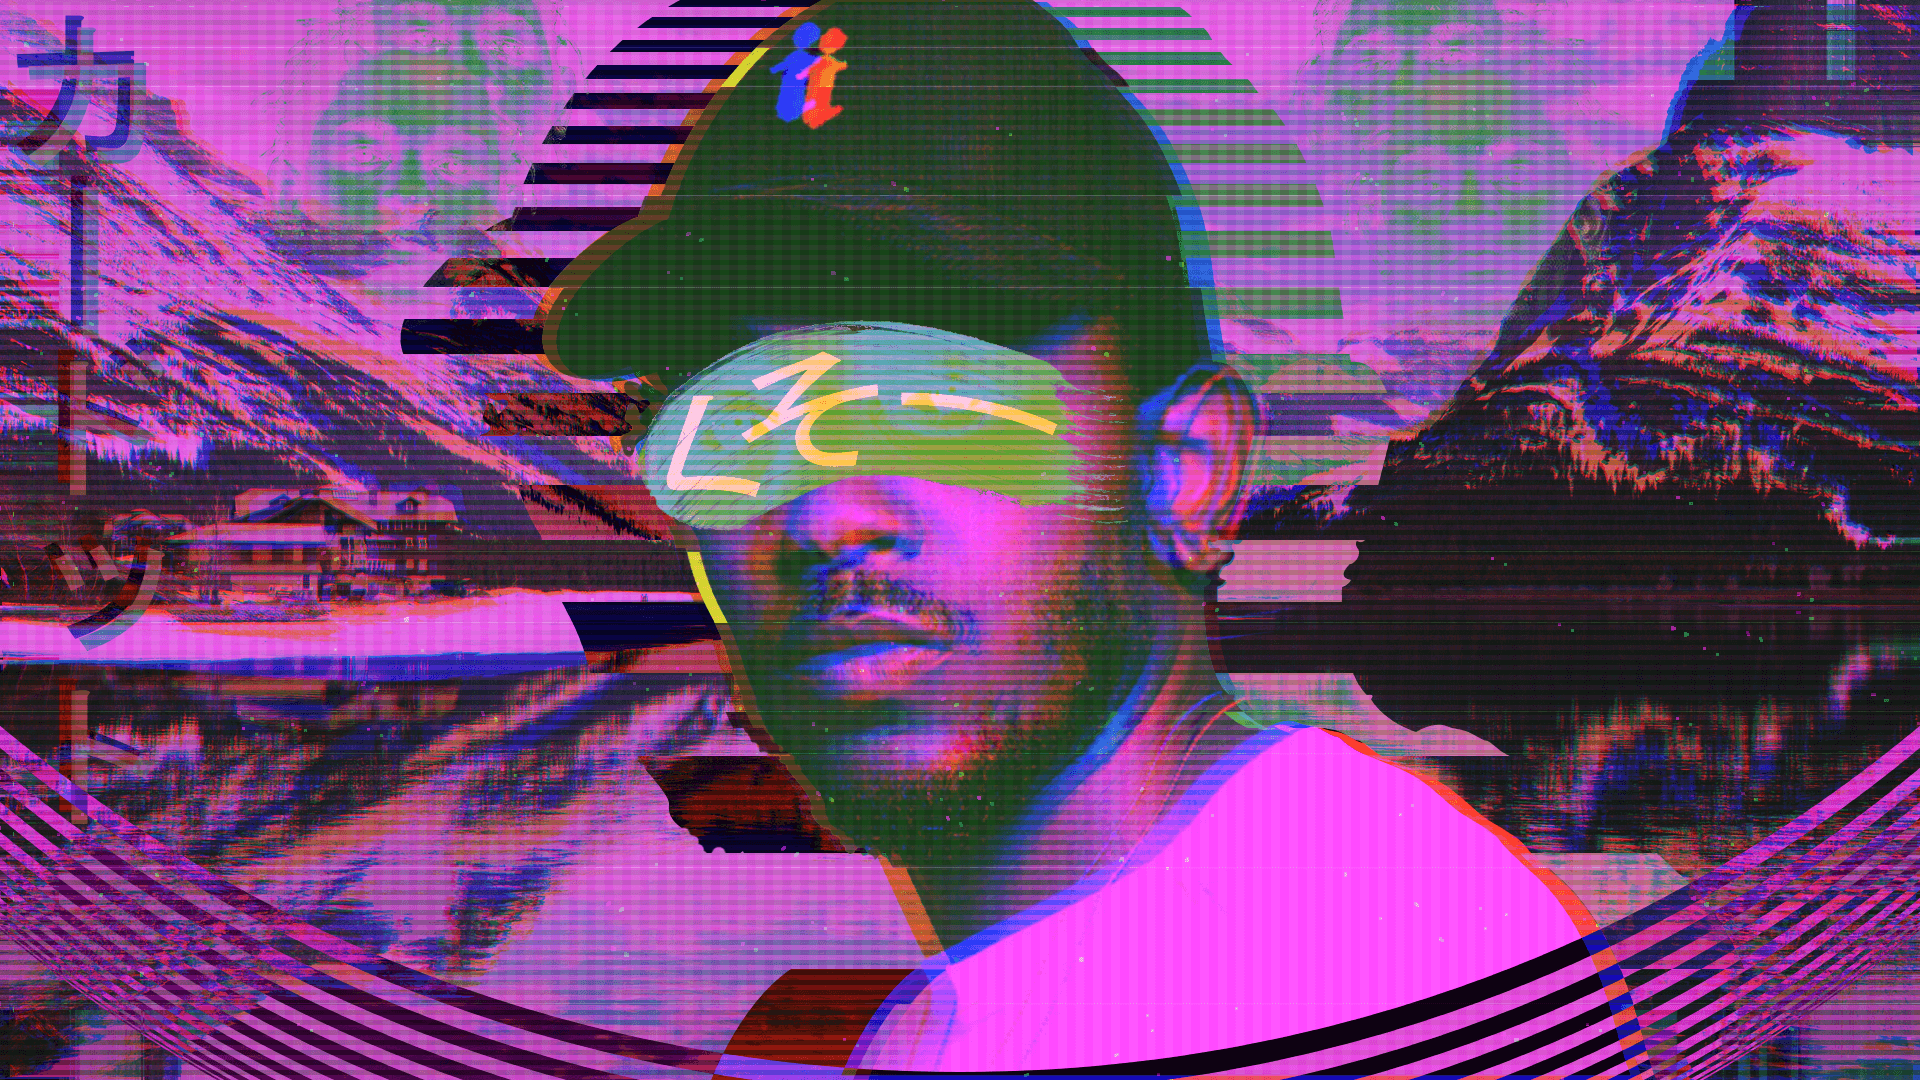 Kendrick Lamar Vaporwave Ish Wallpaper [1980x1080] [OC]. Vaporwave Art, Vaporwave Aesthetic, Album Design